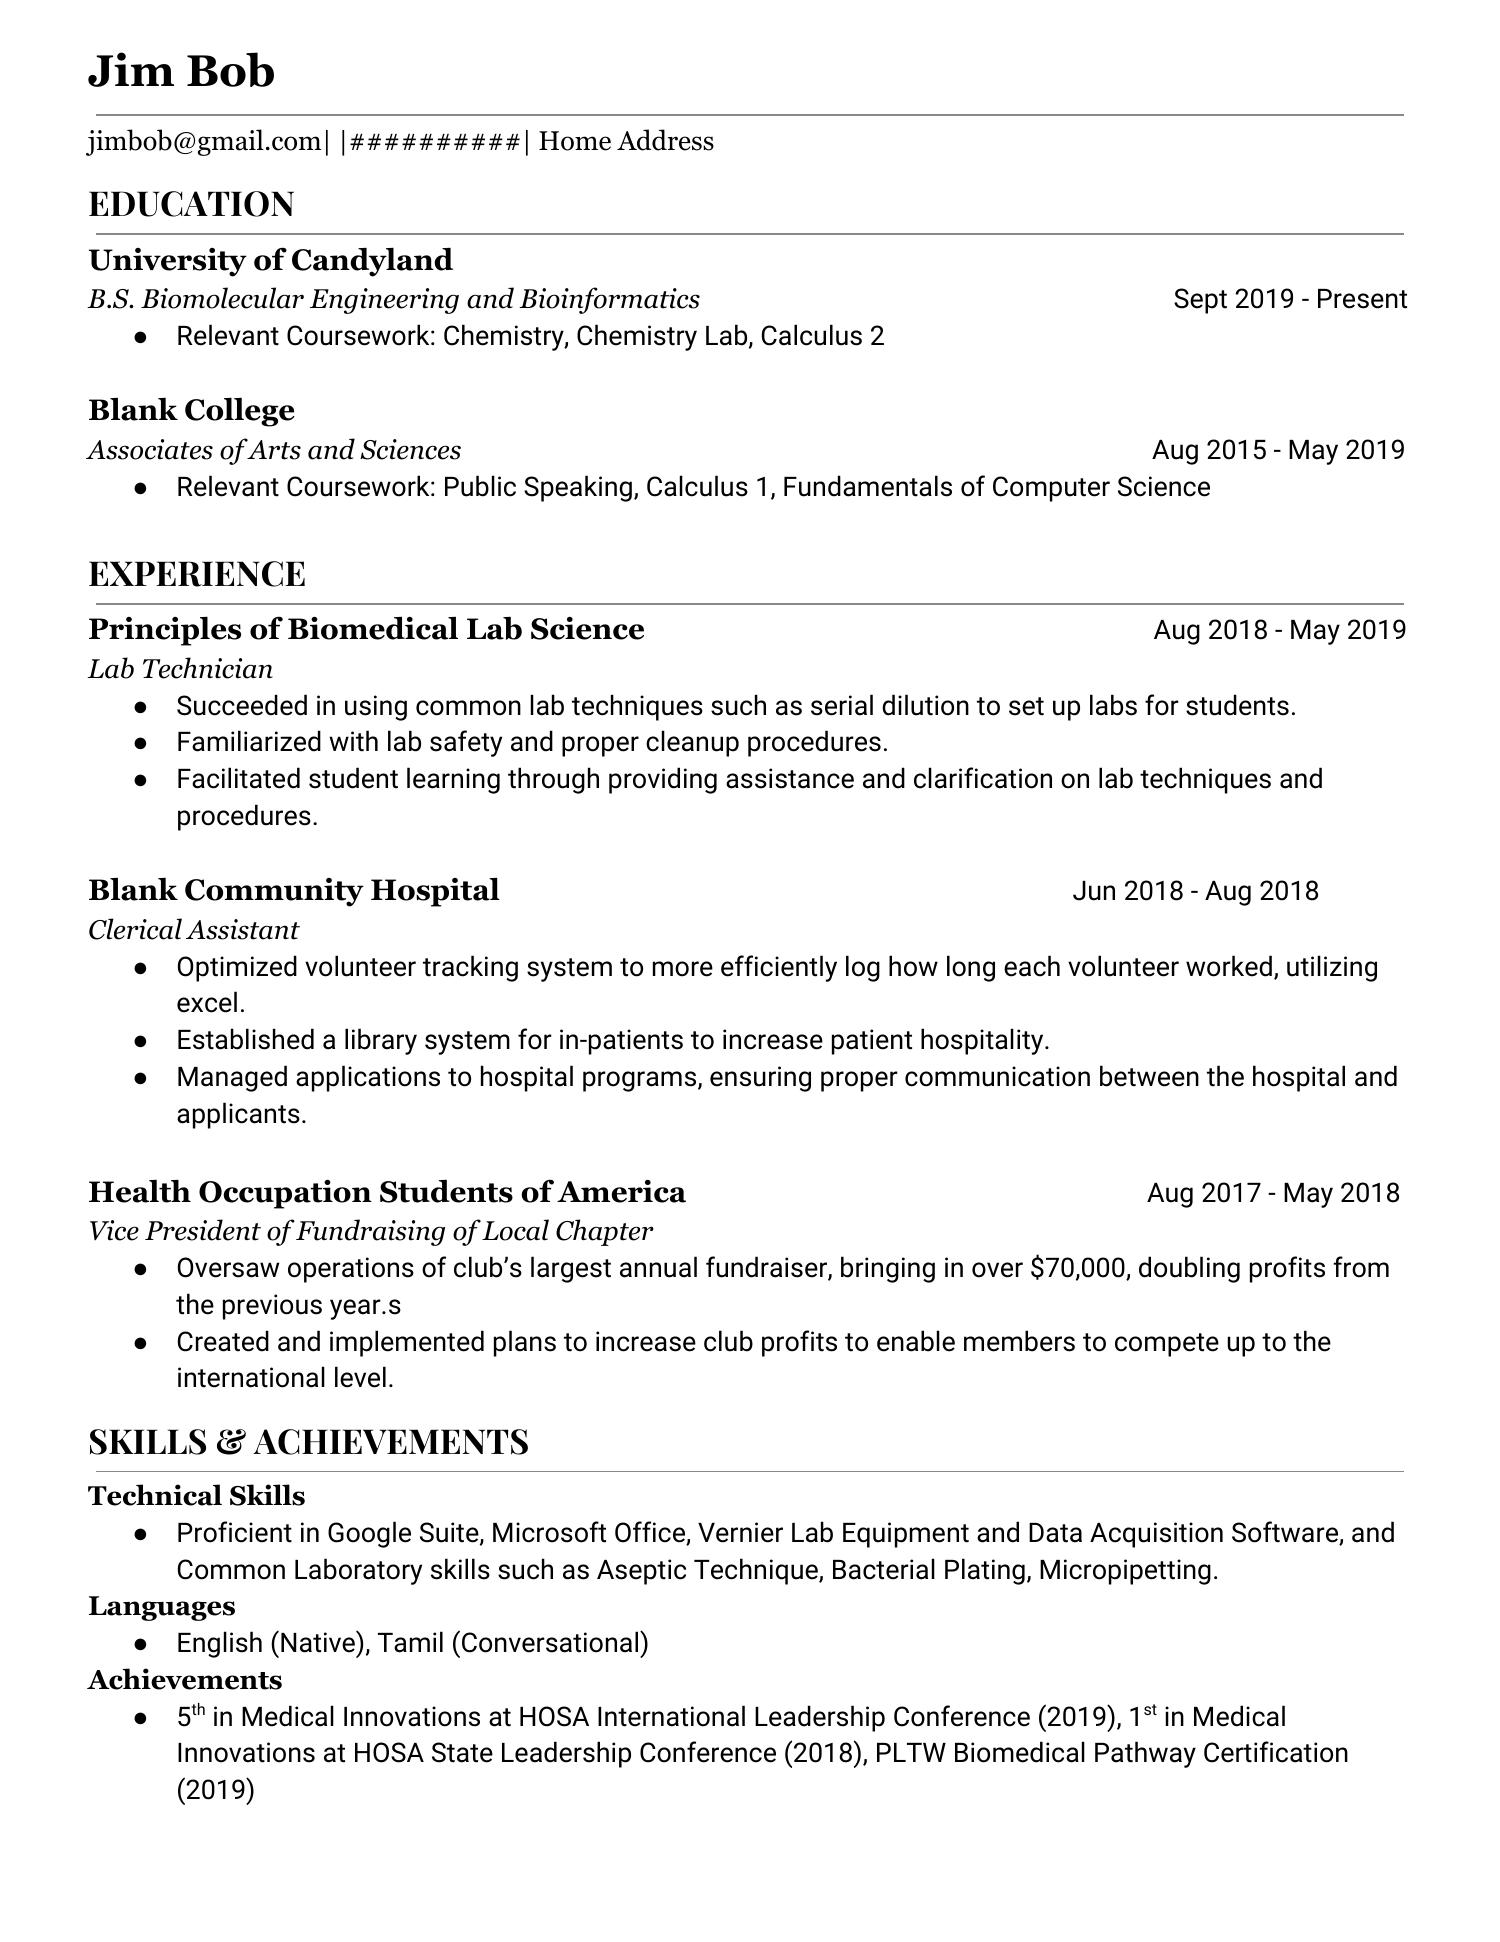 resume personal profile reddit